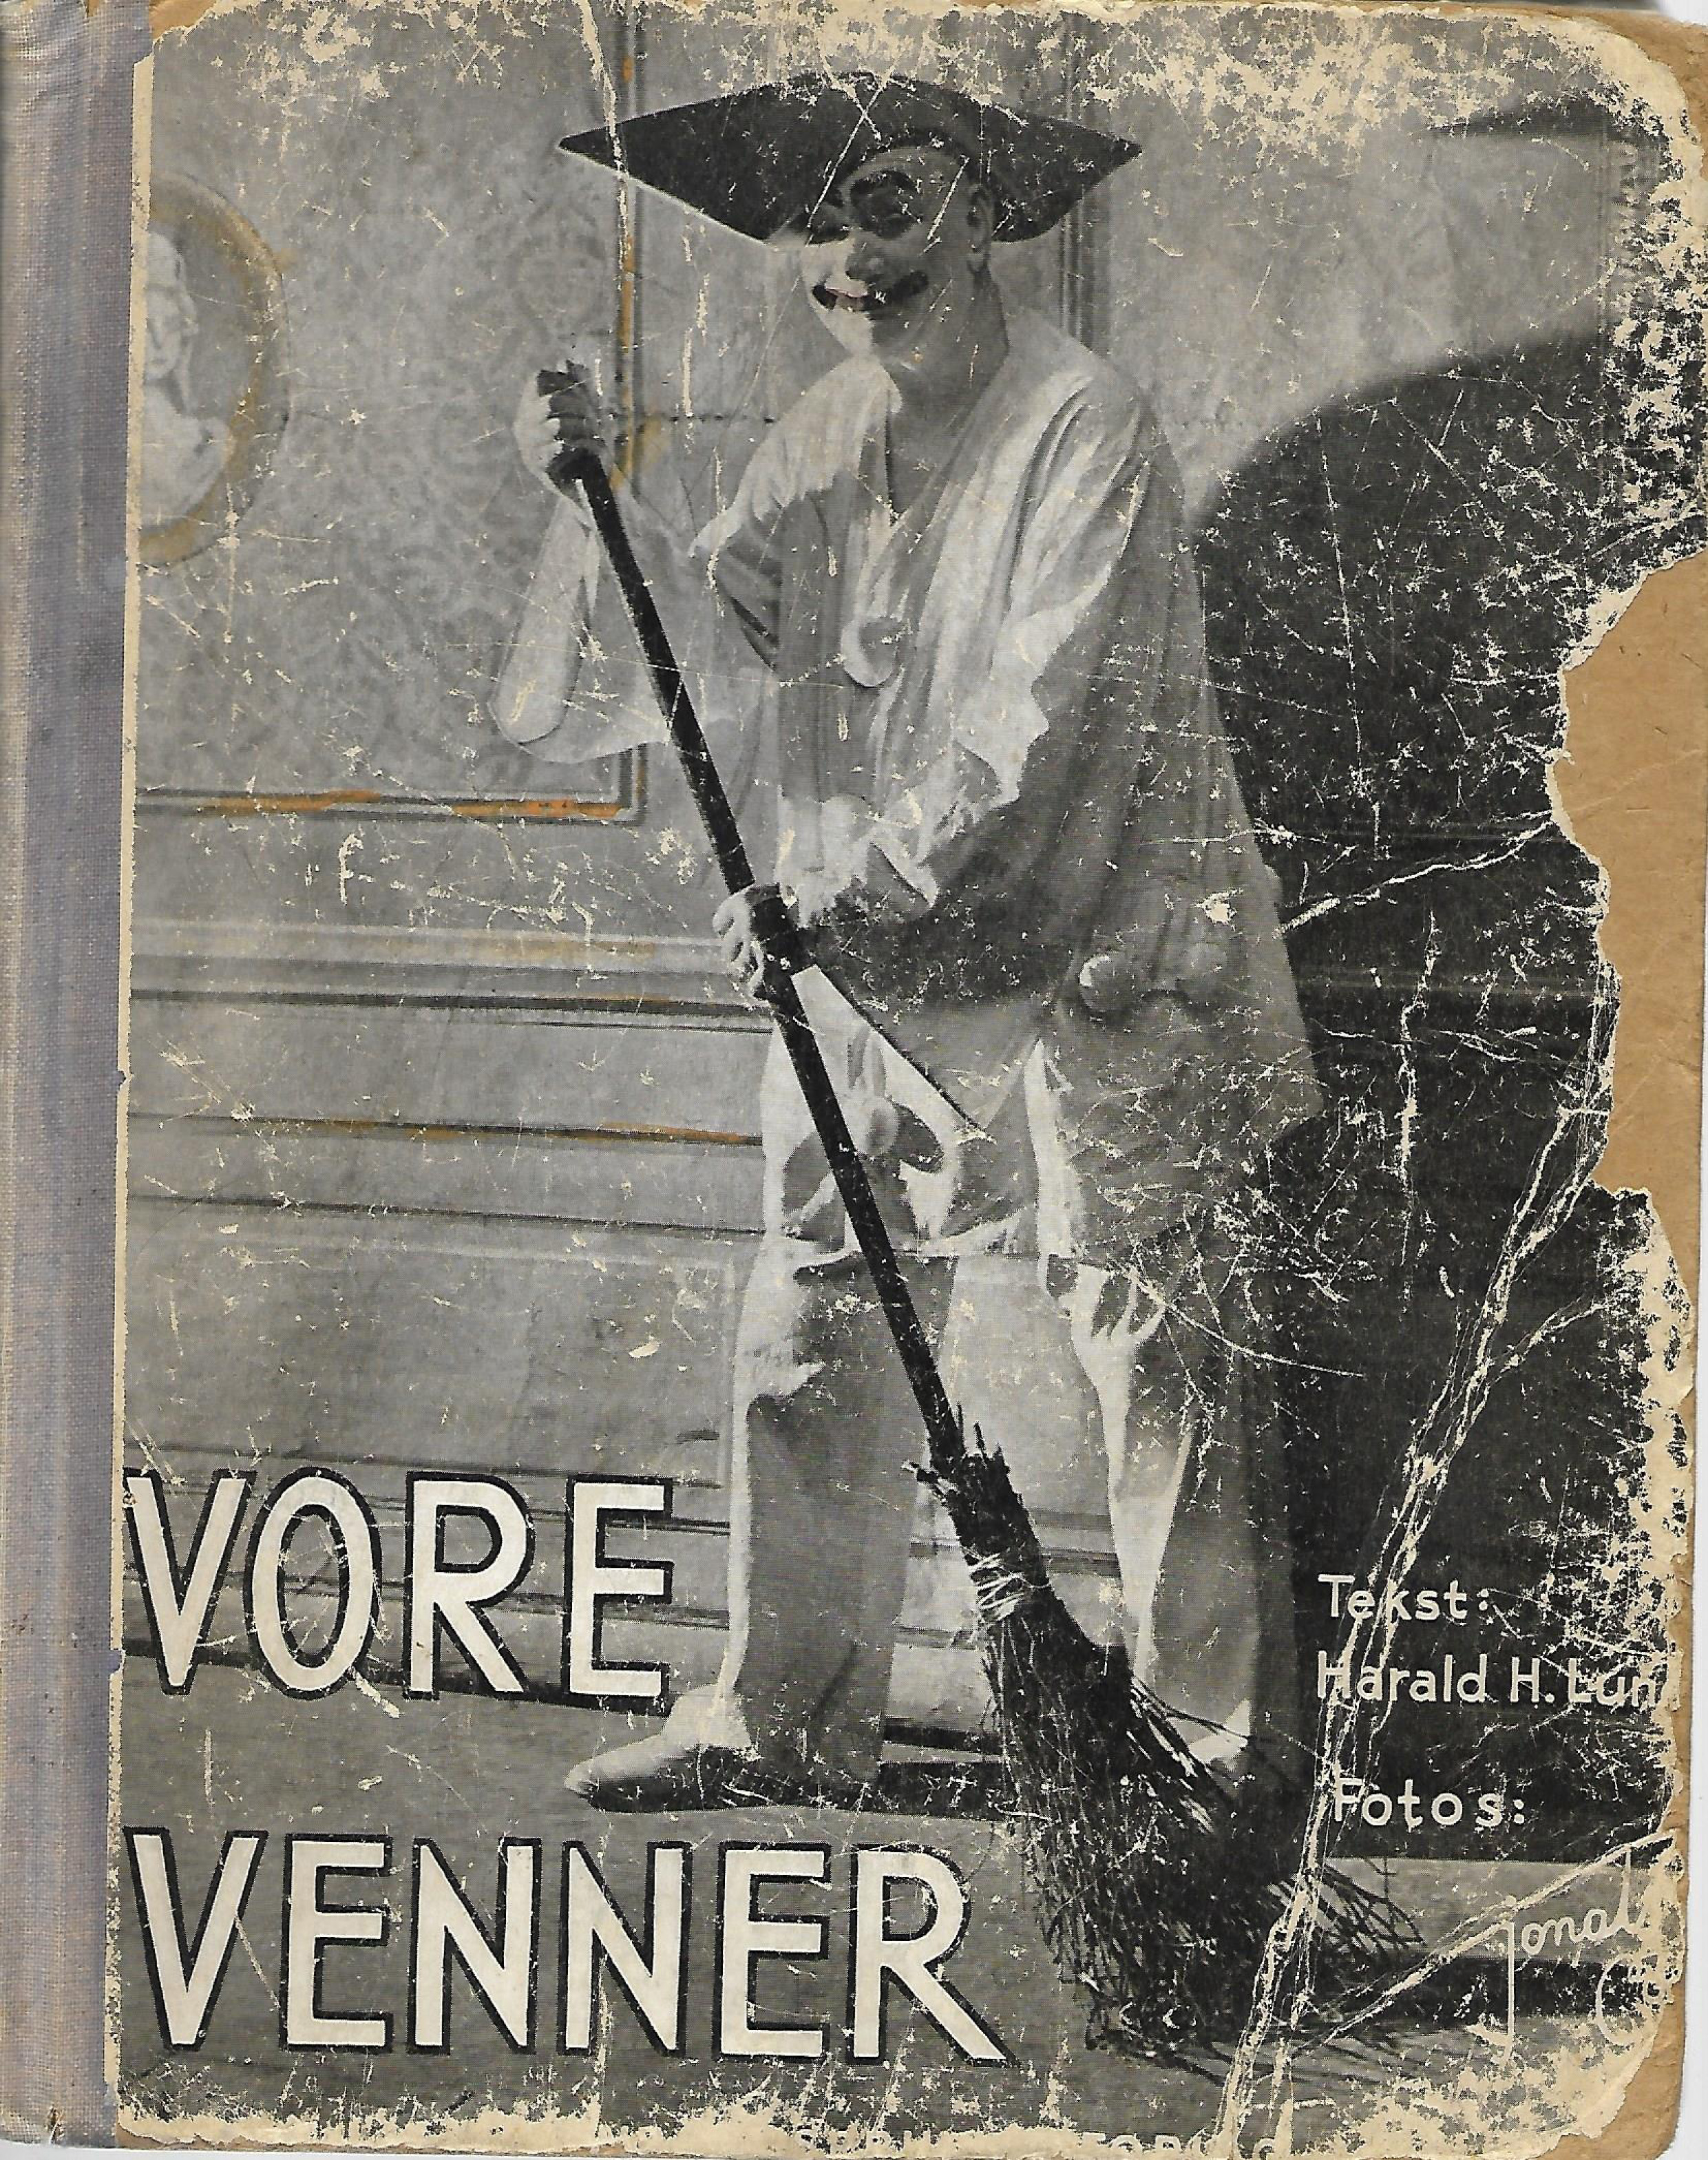 Vore Venner 1933 - Harald H Lund-1